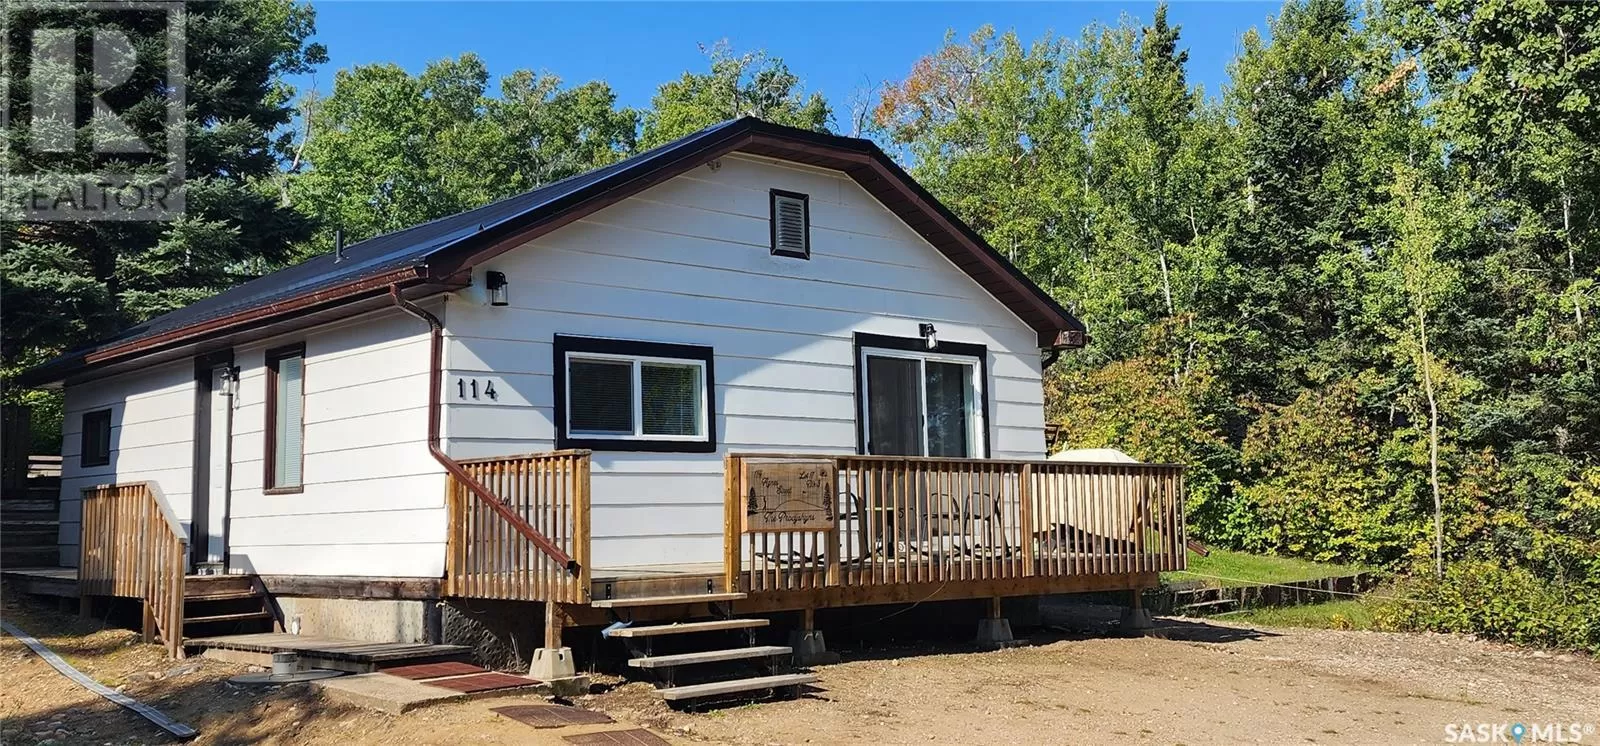 House for rent: 114 Agnes Street, Emma Lake, Saskatchewan S0J 0N0